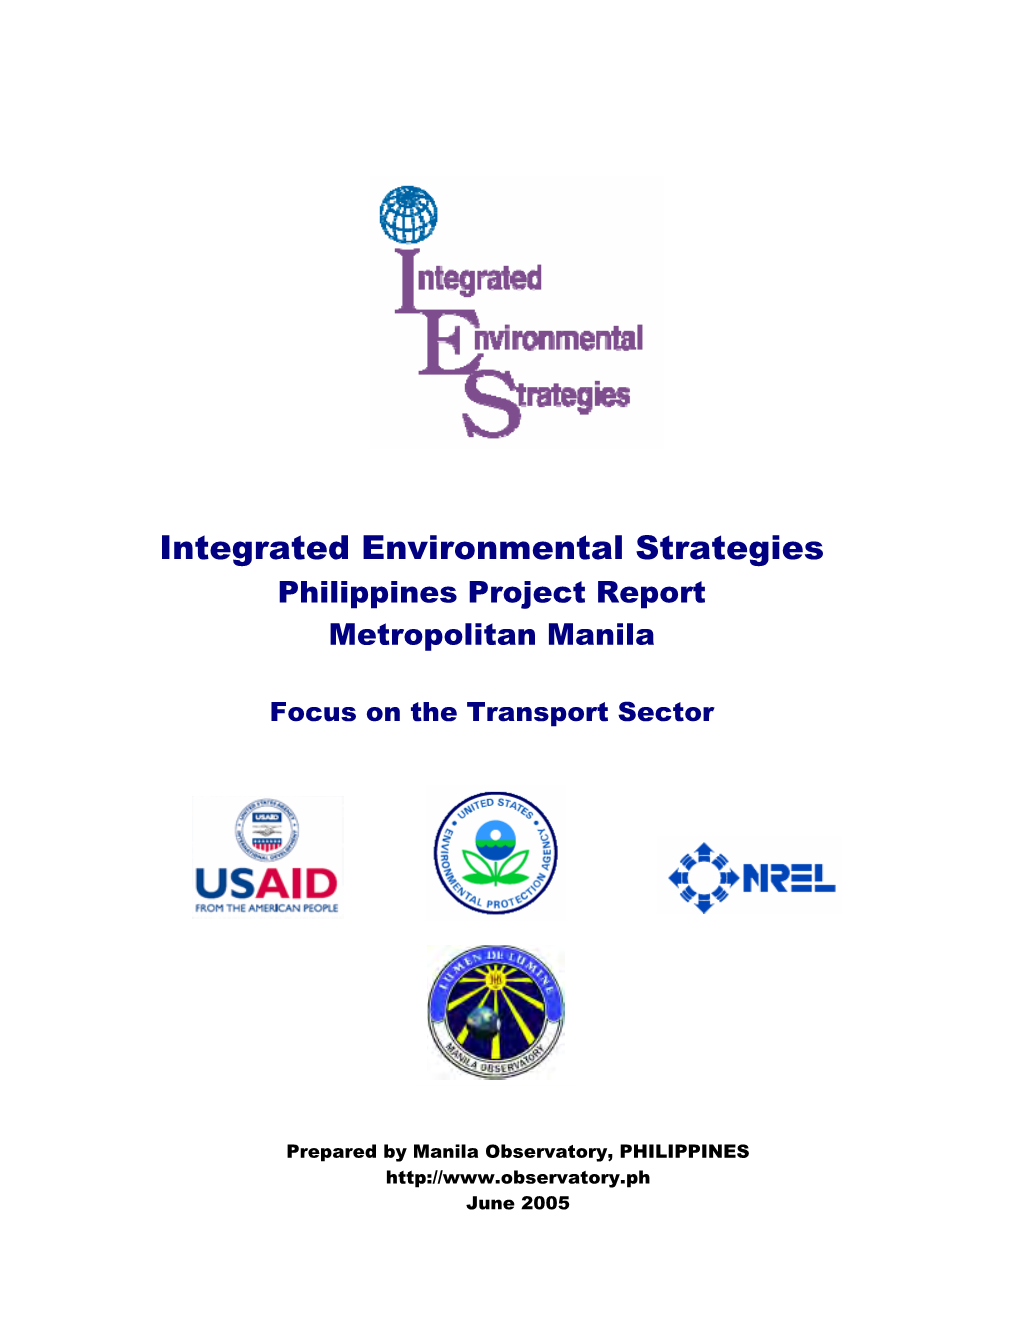 Integrated Environmental Strategies Philippines Project Report Metropolitan Manila